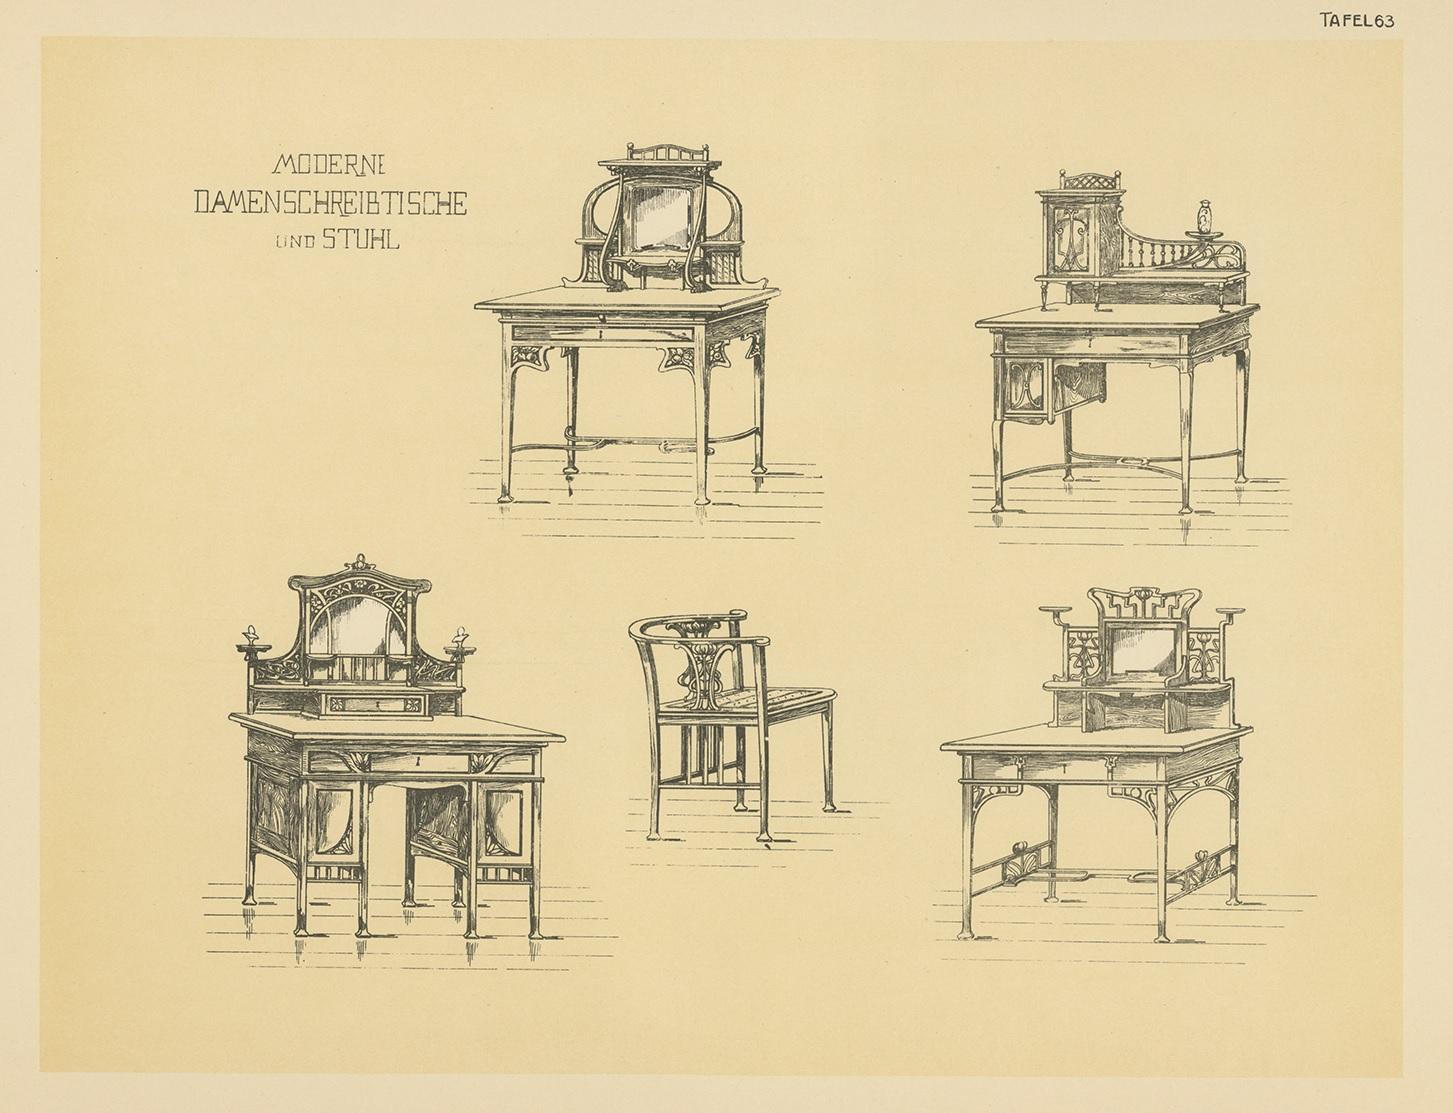 Antique print titled 'Moderne Damenschreibtische und Stuhl'. Lithograph of dining room furniture. This print originates from 'Det Moderna Hemmet' by Johannes Kramer. Published by Ferdinand Hey'l, circa 1910.